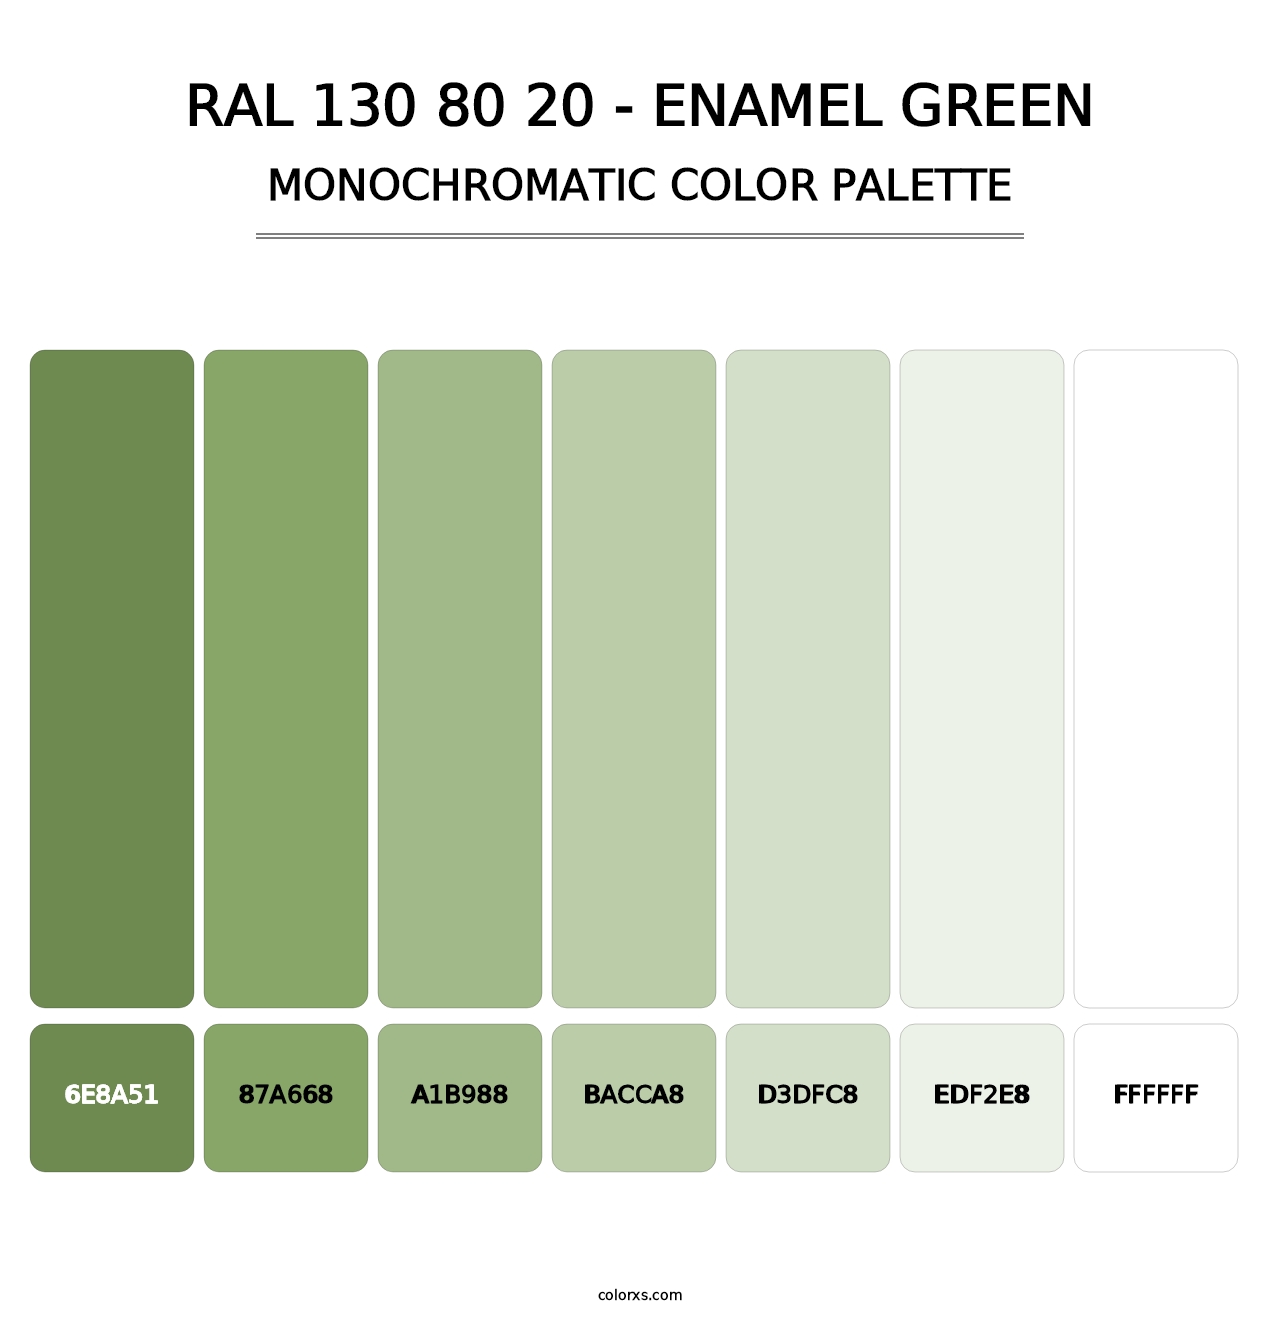 RAL 130 80 20 - Enamel Green - Monochromatic Color Palette